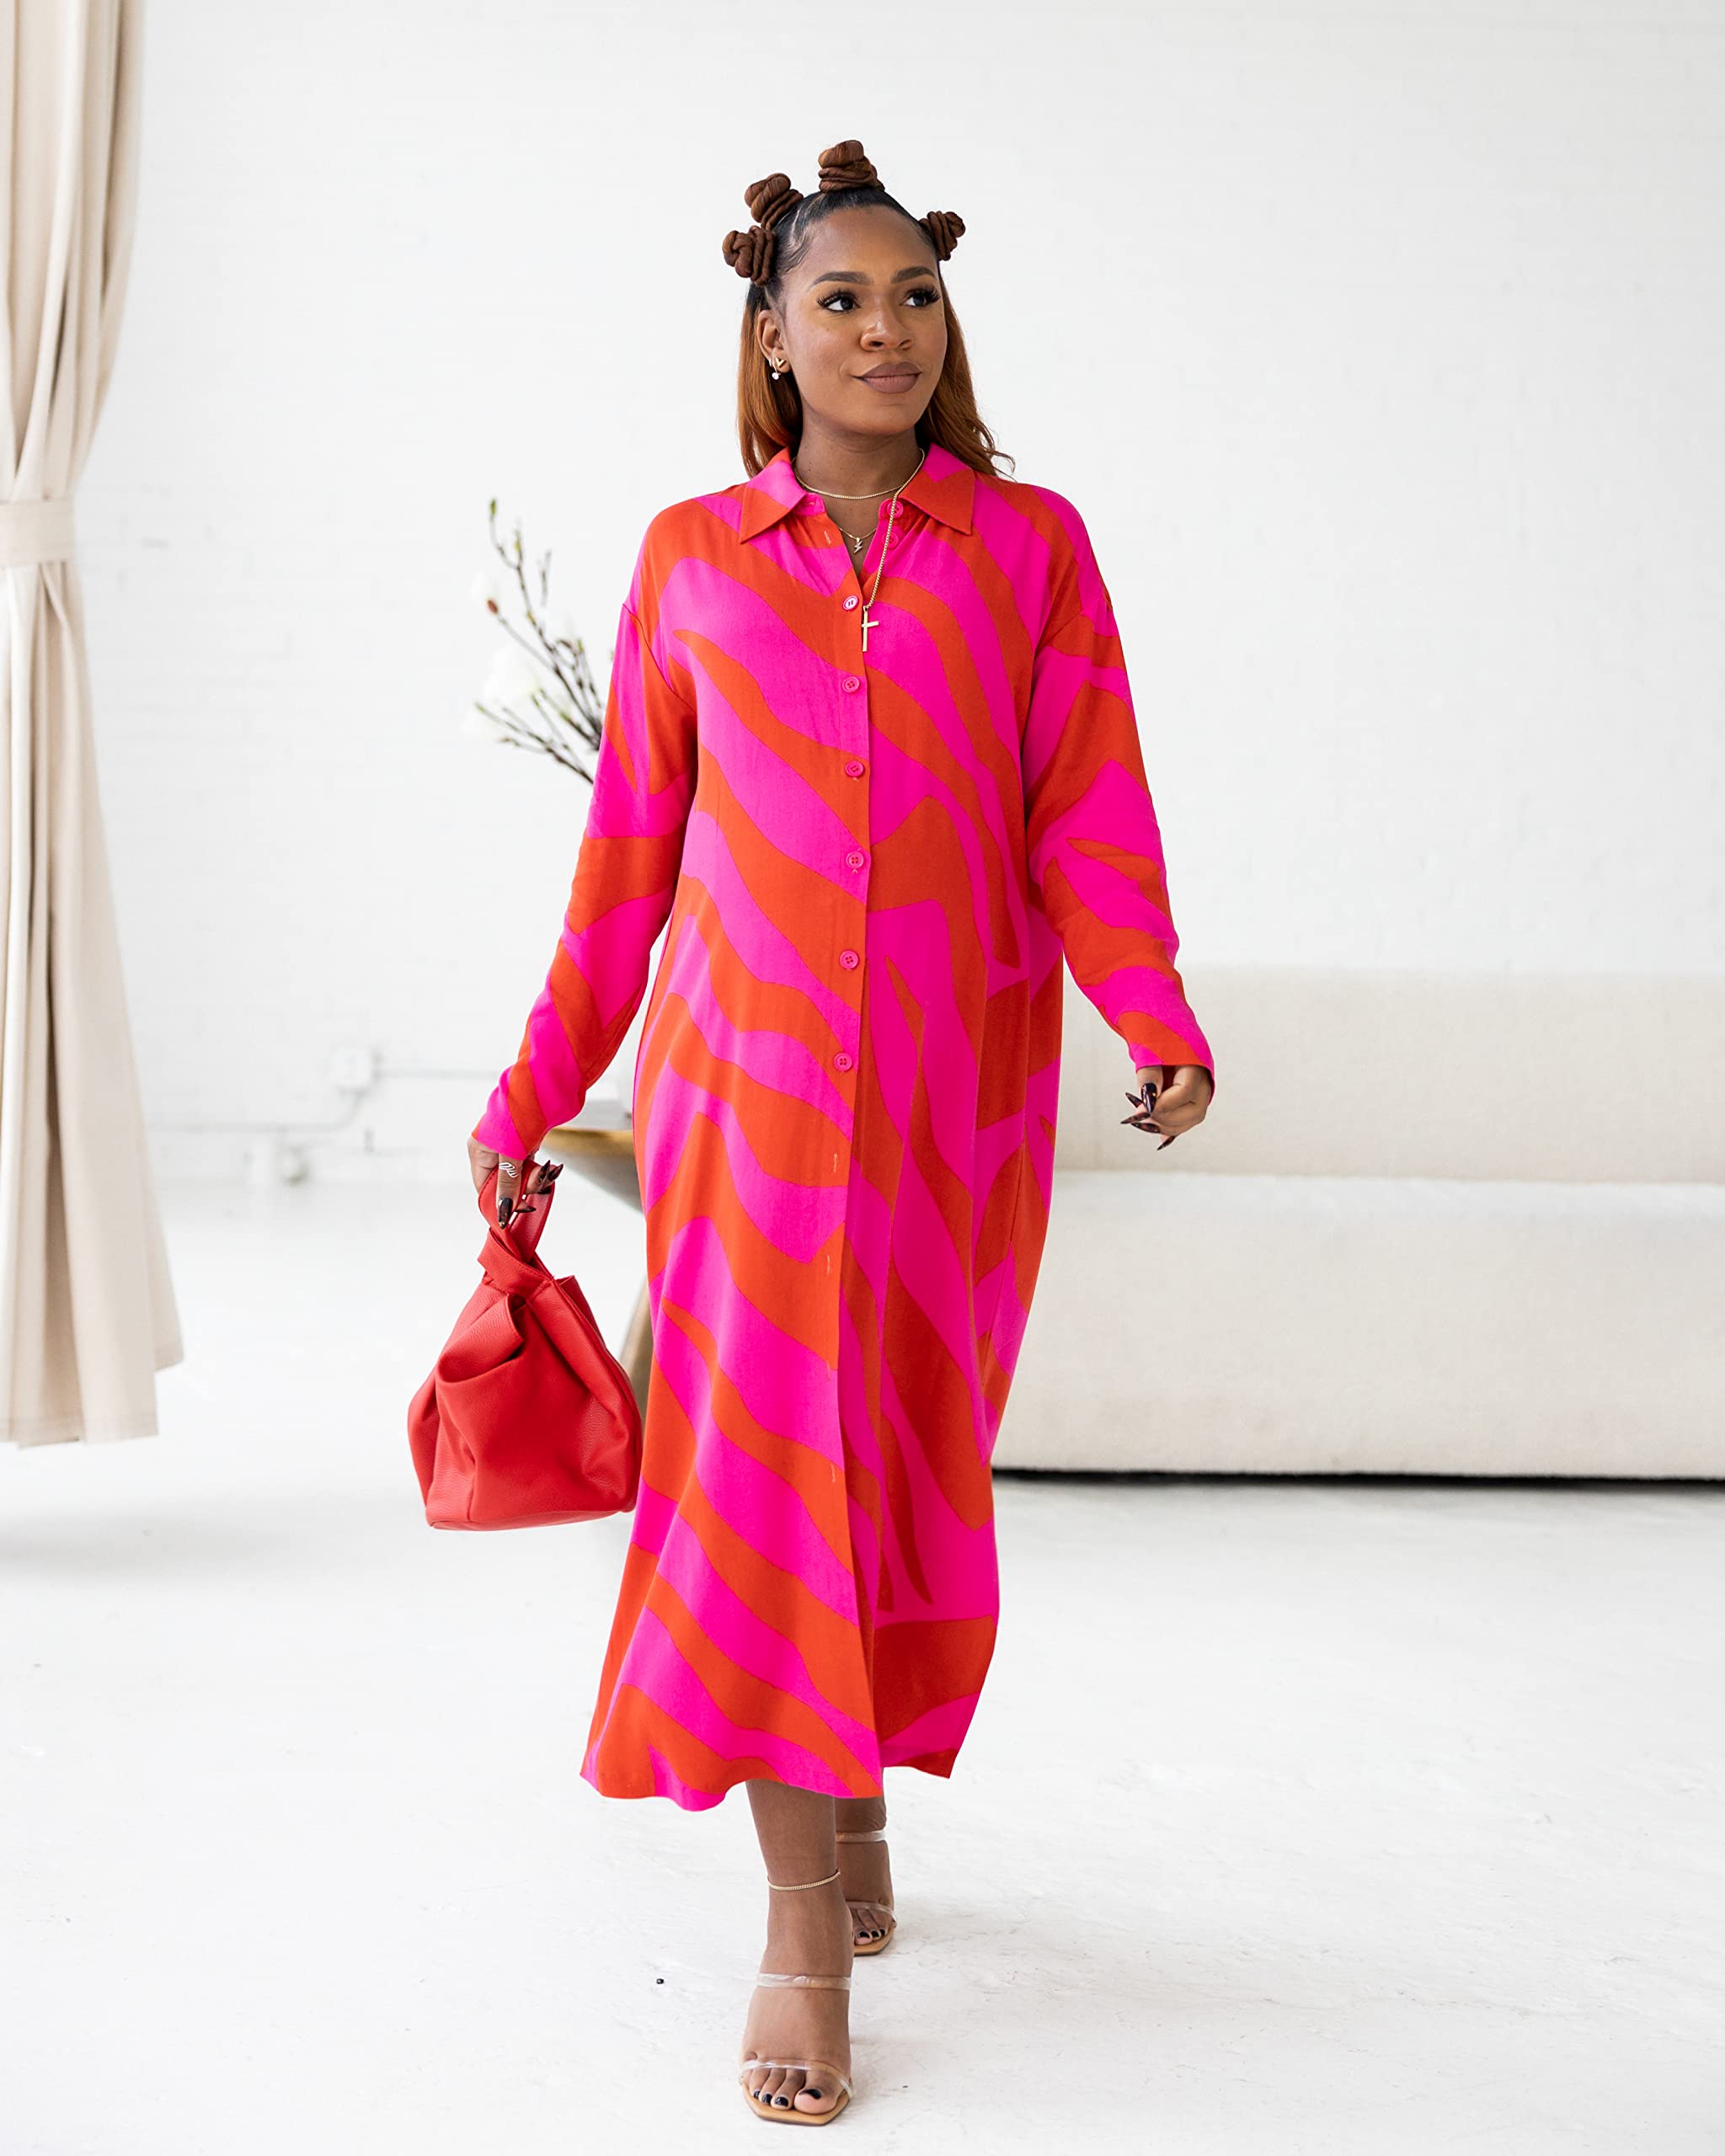 The Drop Women's Pink/Red Zebra Print Shirtdress by @victoriouslogan